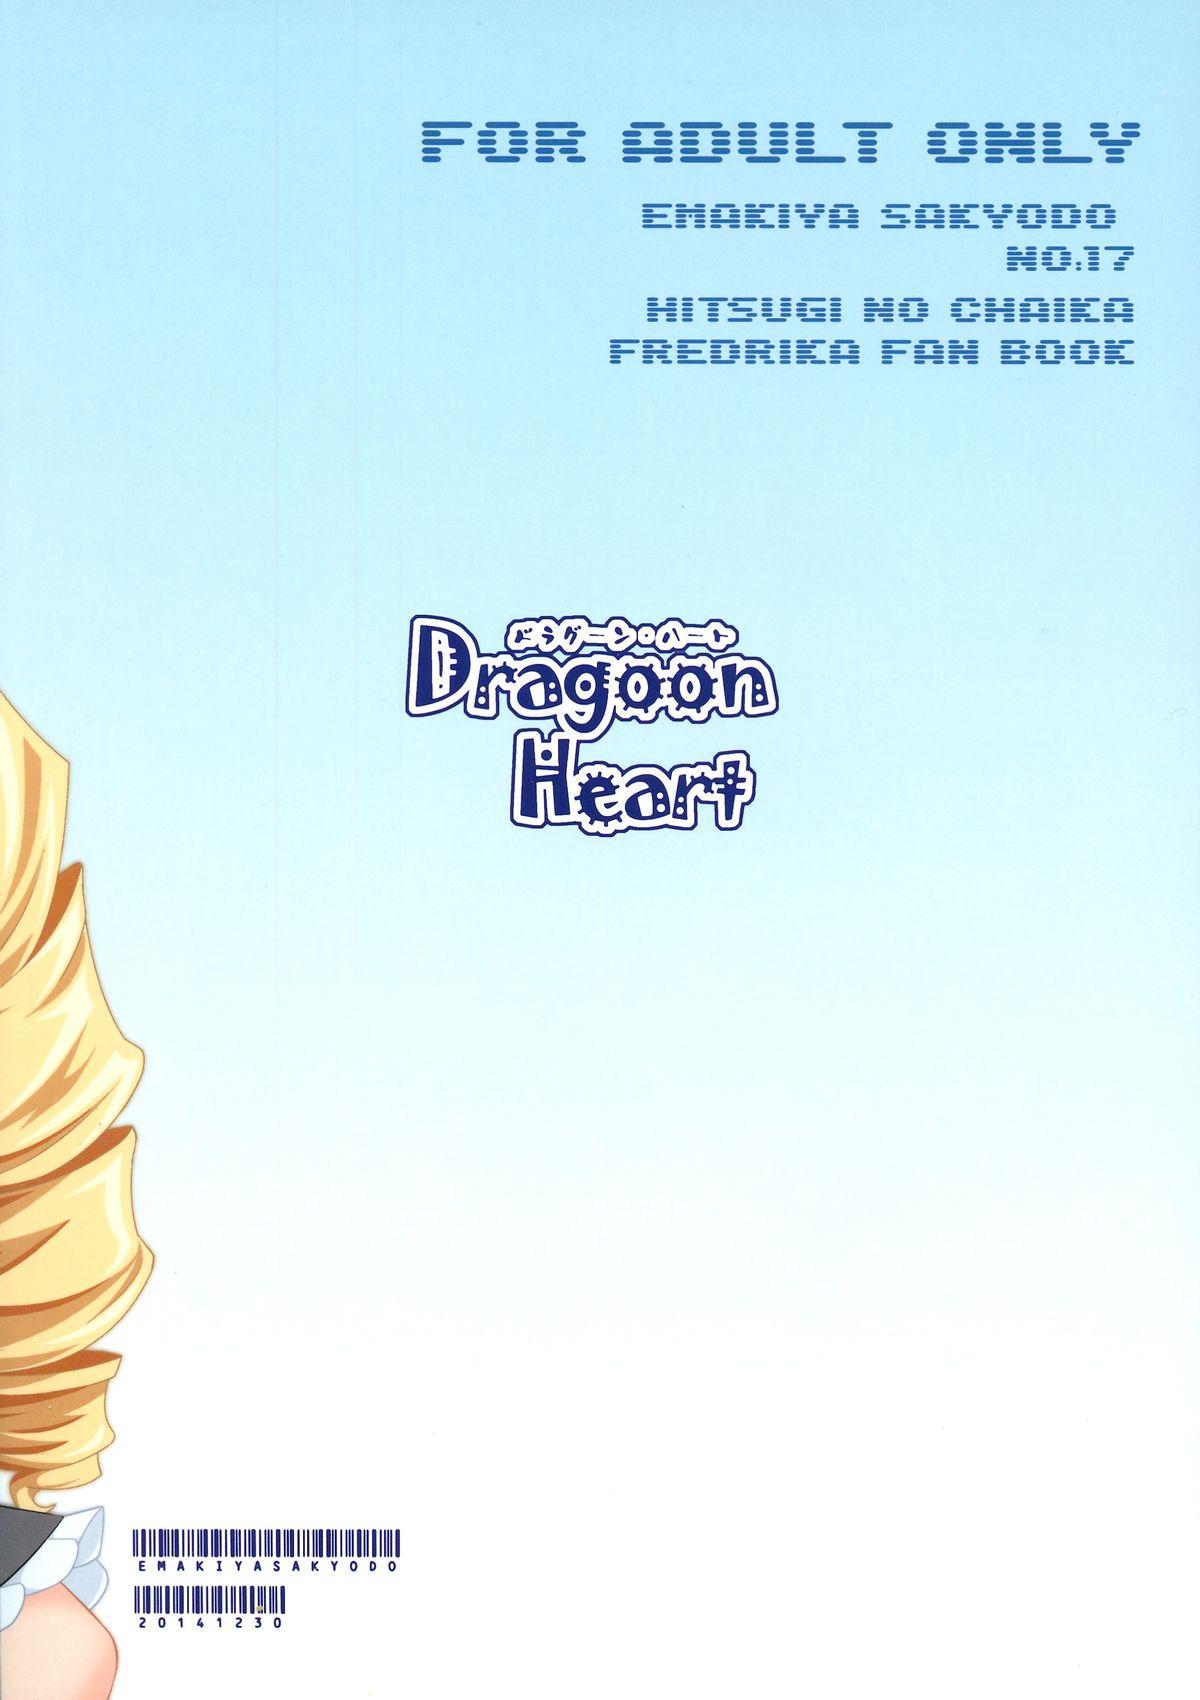 Orgasm Dragoon Heart - Hitsugi no chaika Mature Woman - Page 2